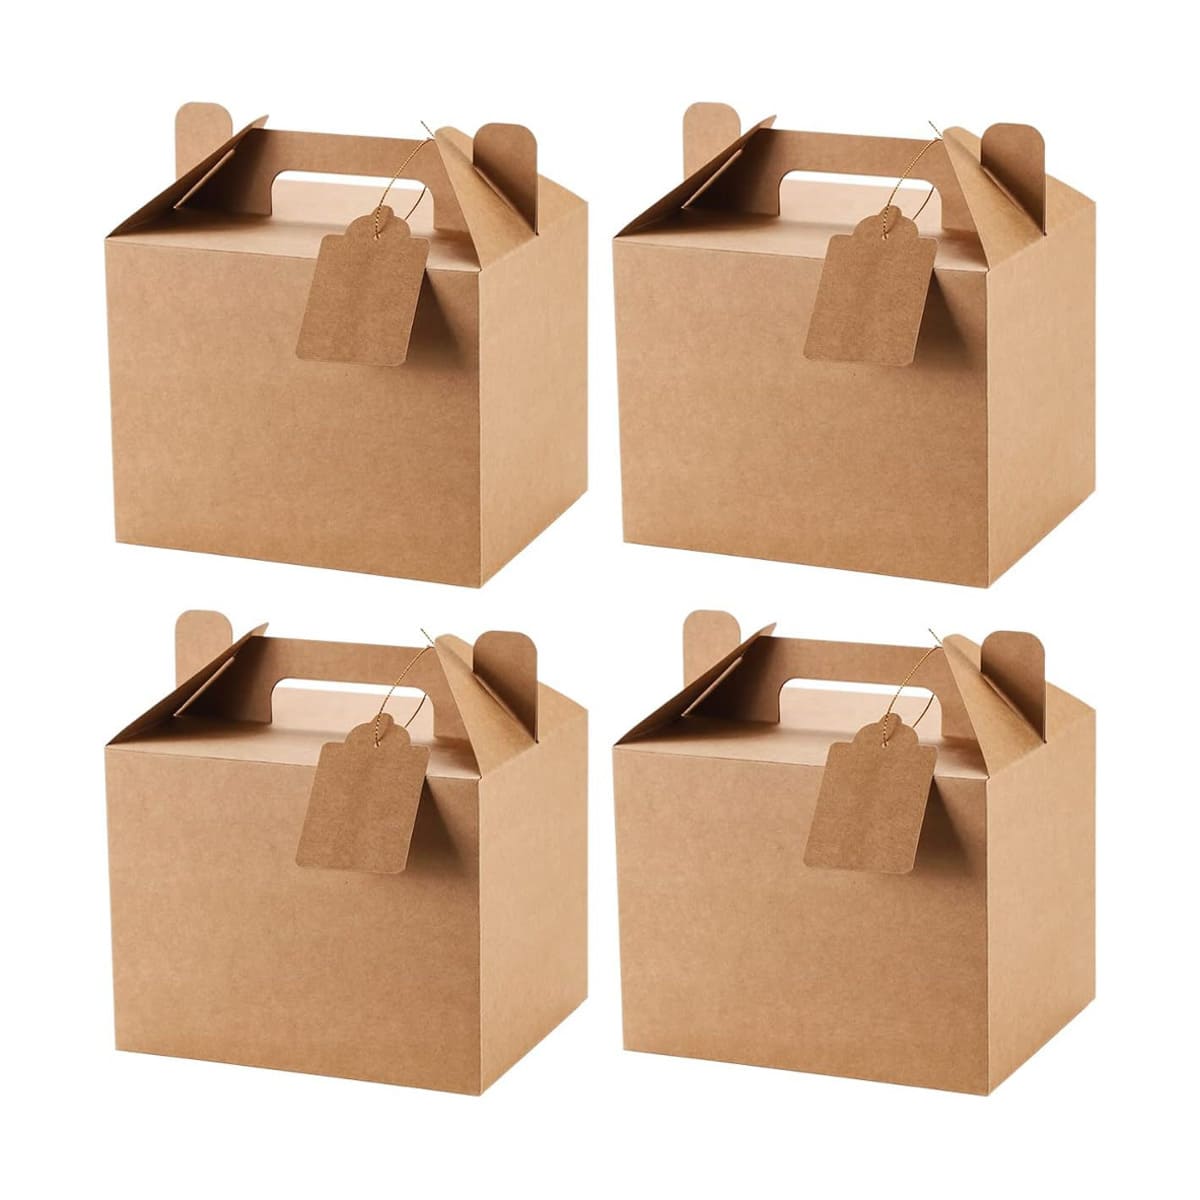 Brown gable boxes.